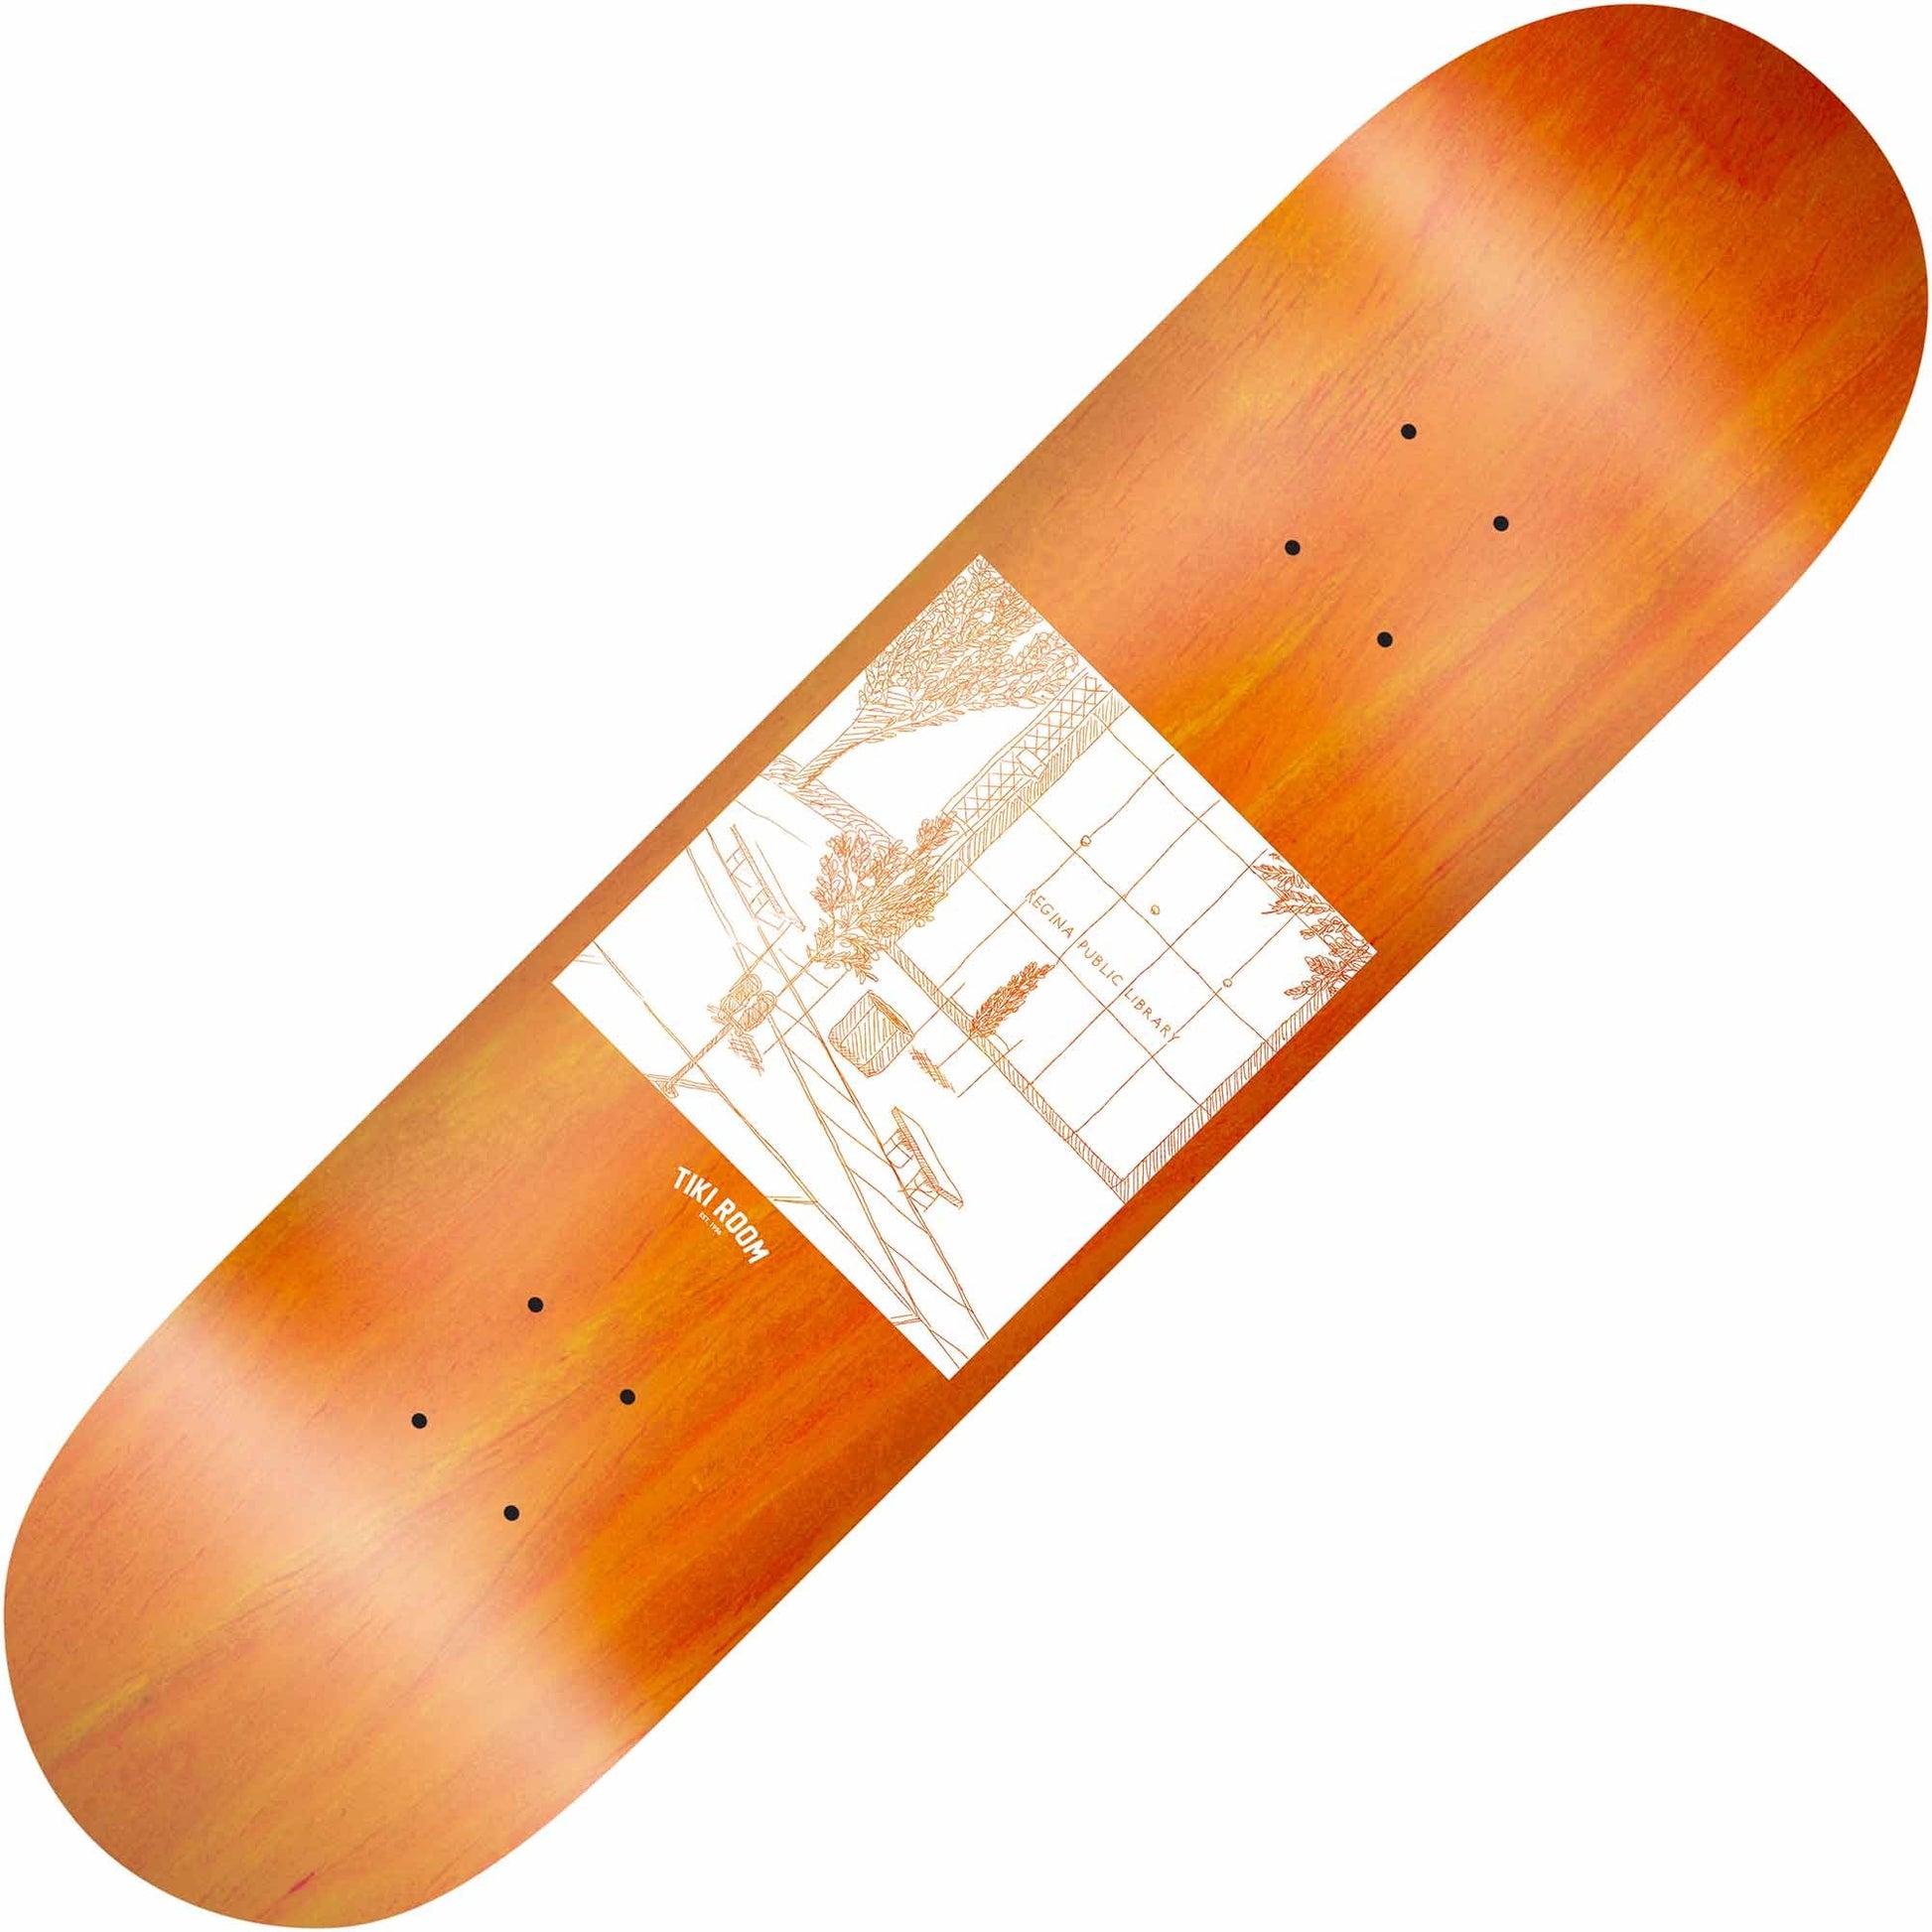 Tiki Room RPL Deck (8.125") - Tiki Room Skateboards - 1